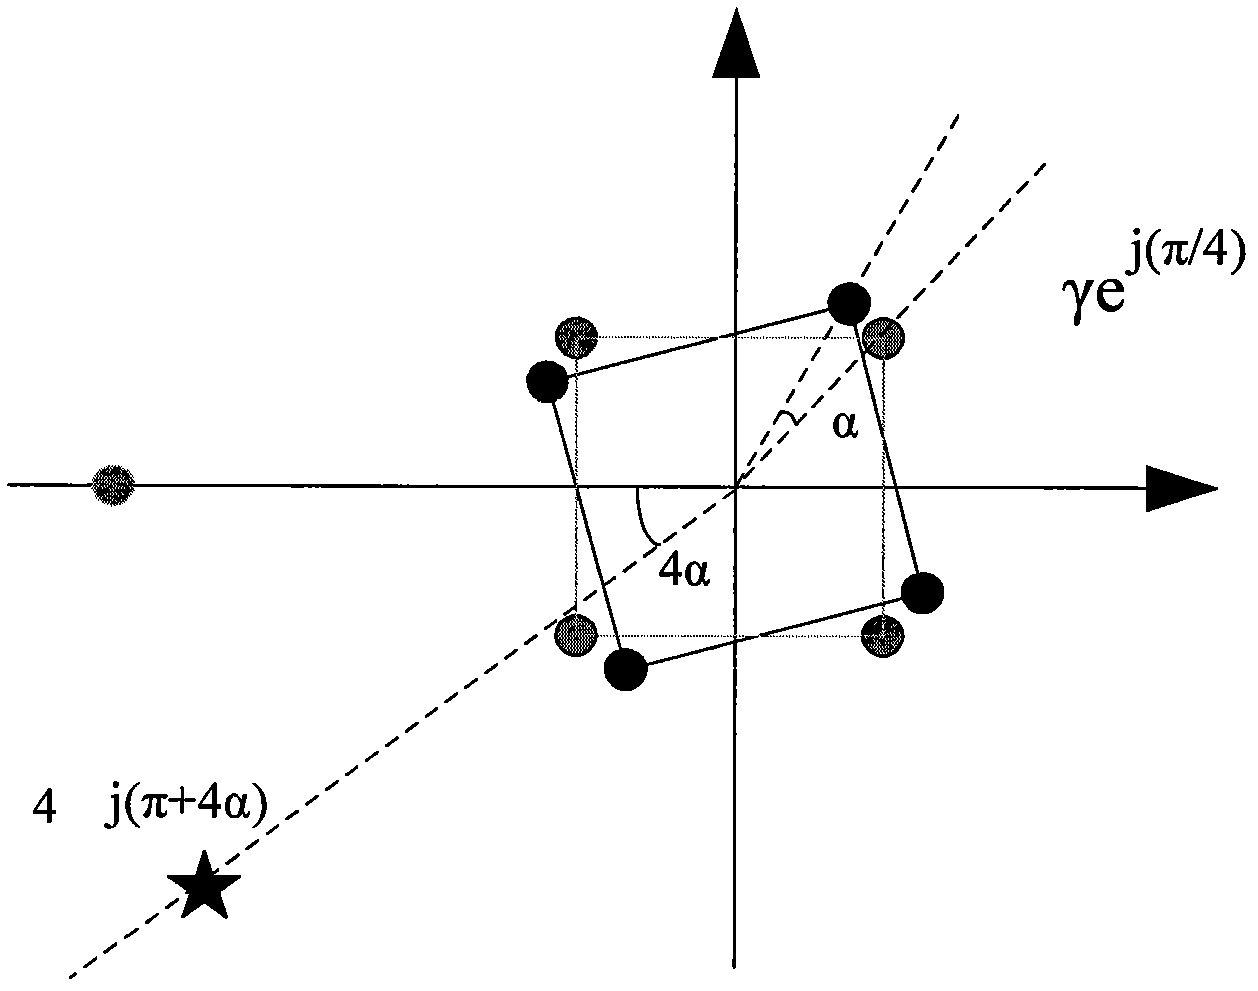 Carrier phase correcting method for QAM modulation